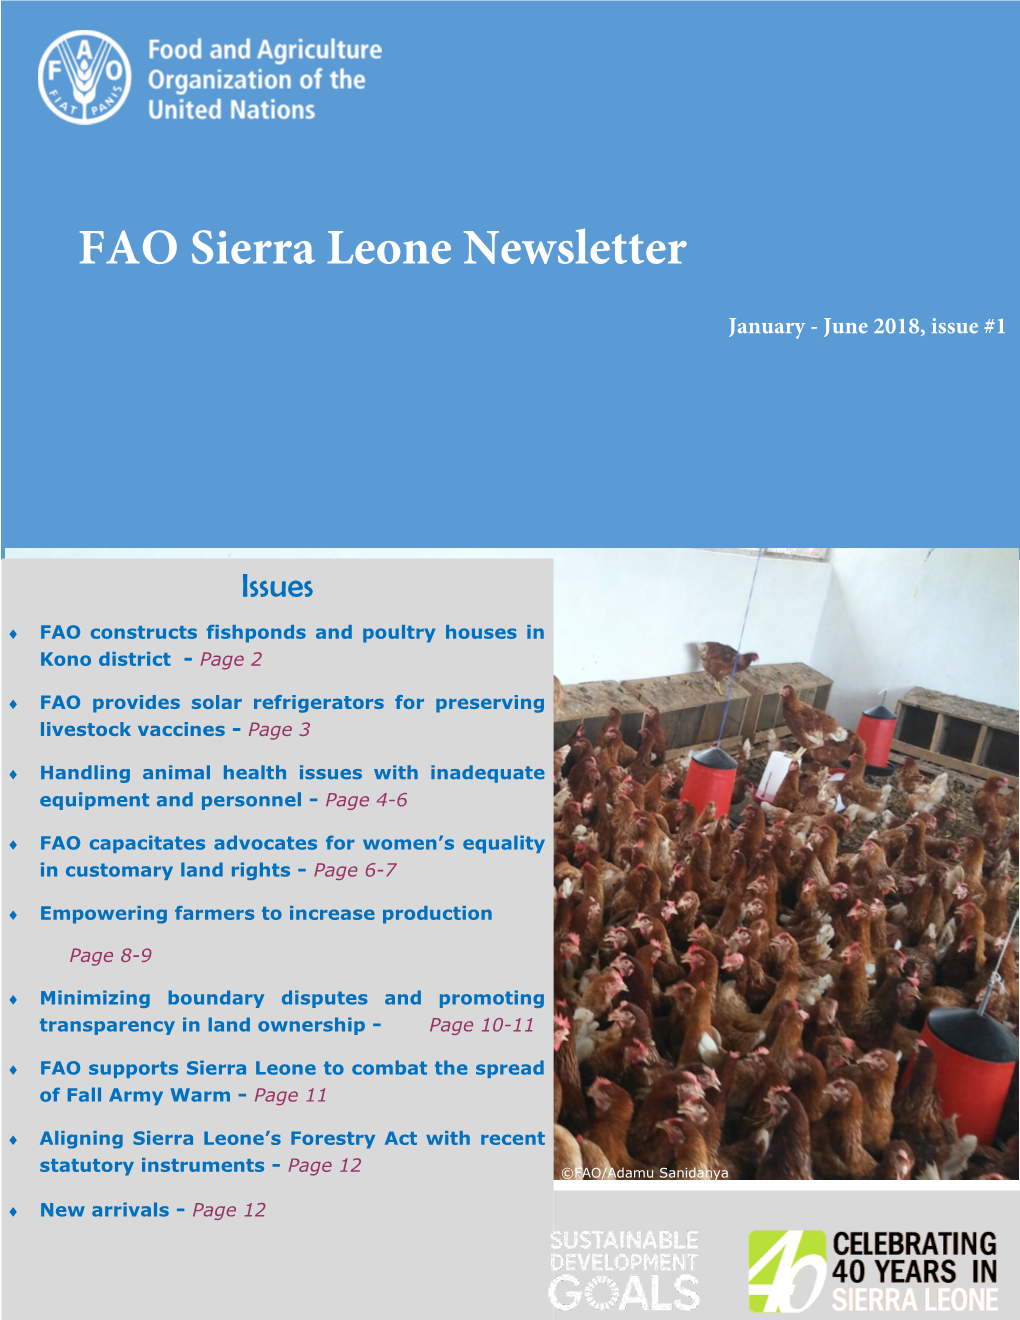 FAO Sierra Leone Newsletter, January